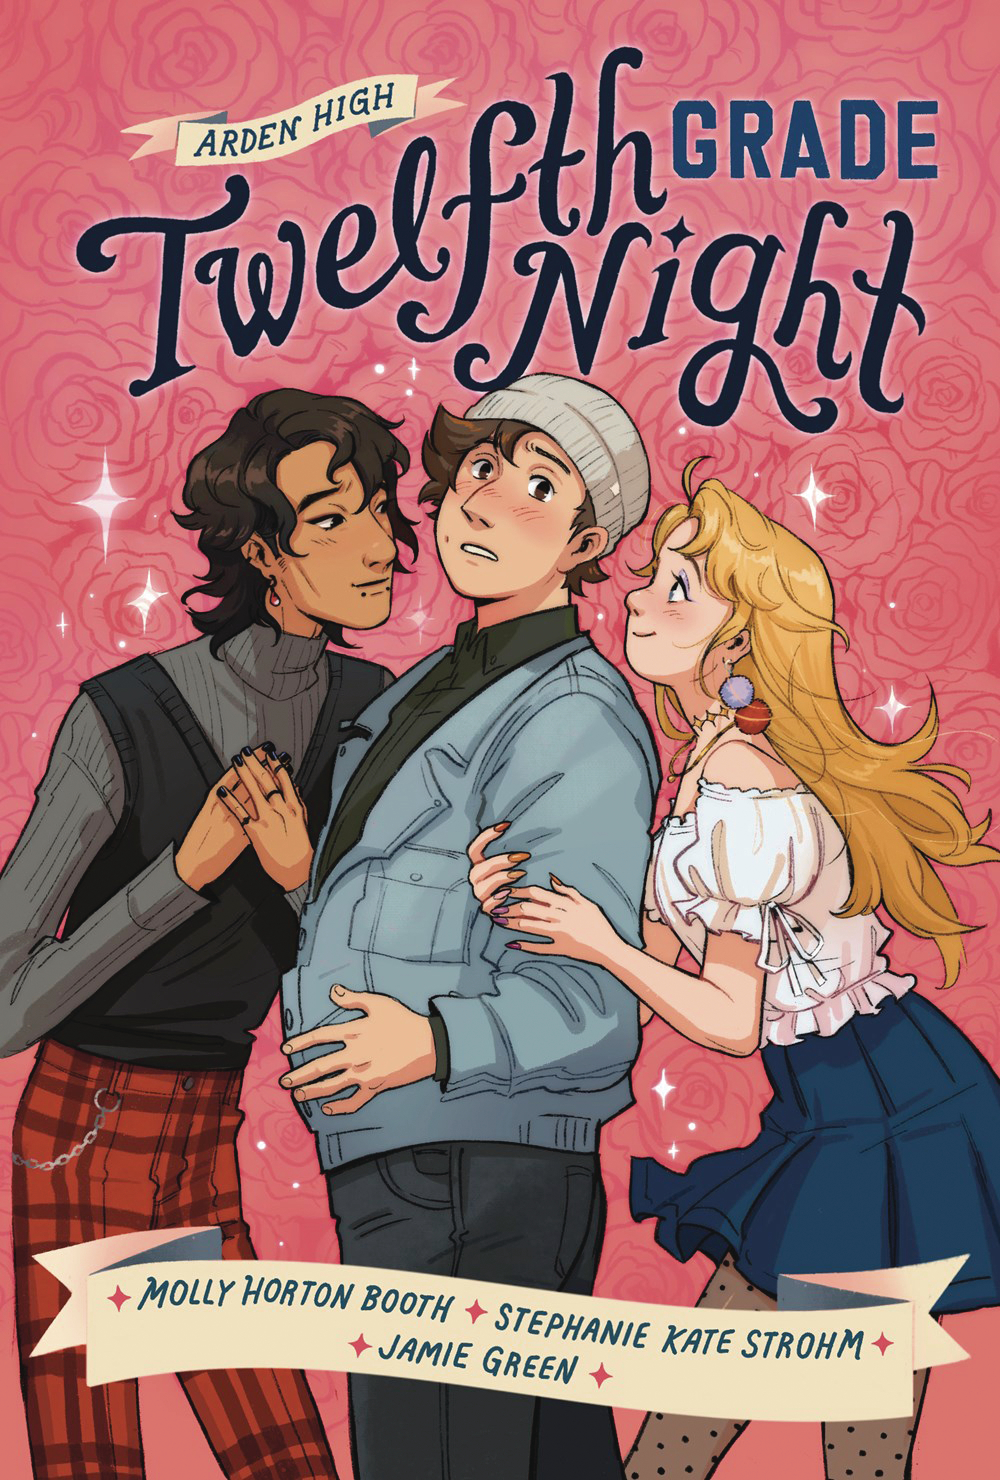 Arden High Hardcover Graphic Novel Volume 1 Twelfth Grade Night